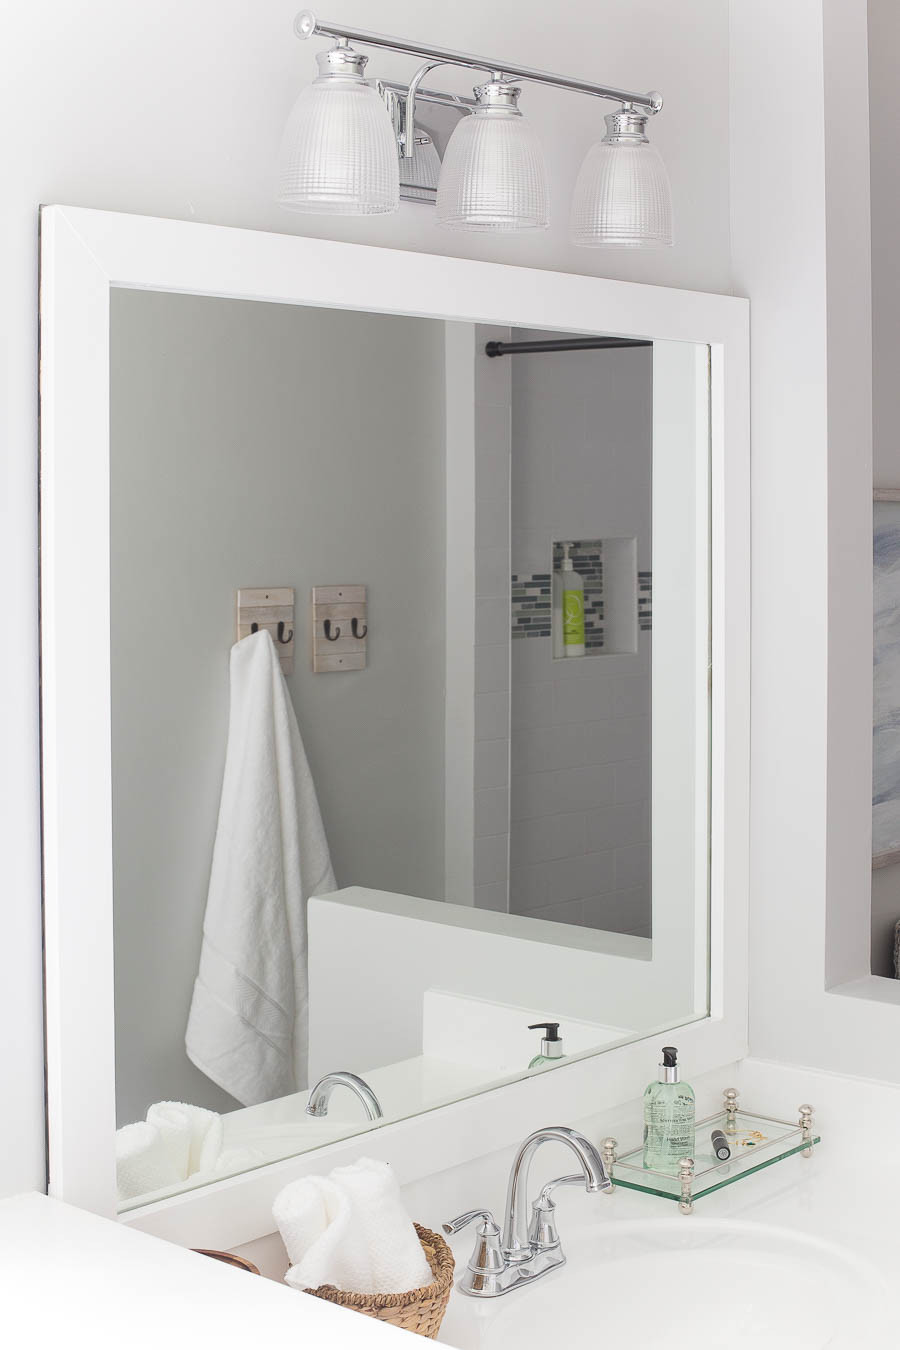 Framed Bathroom Mirror Ideas
 How to Frame a Bathroom Mirror Easy DIY project